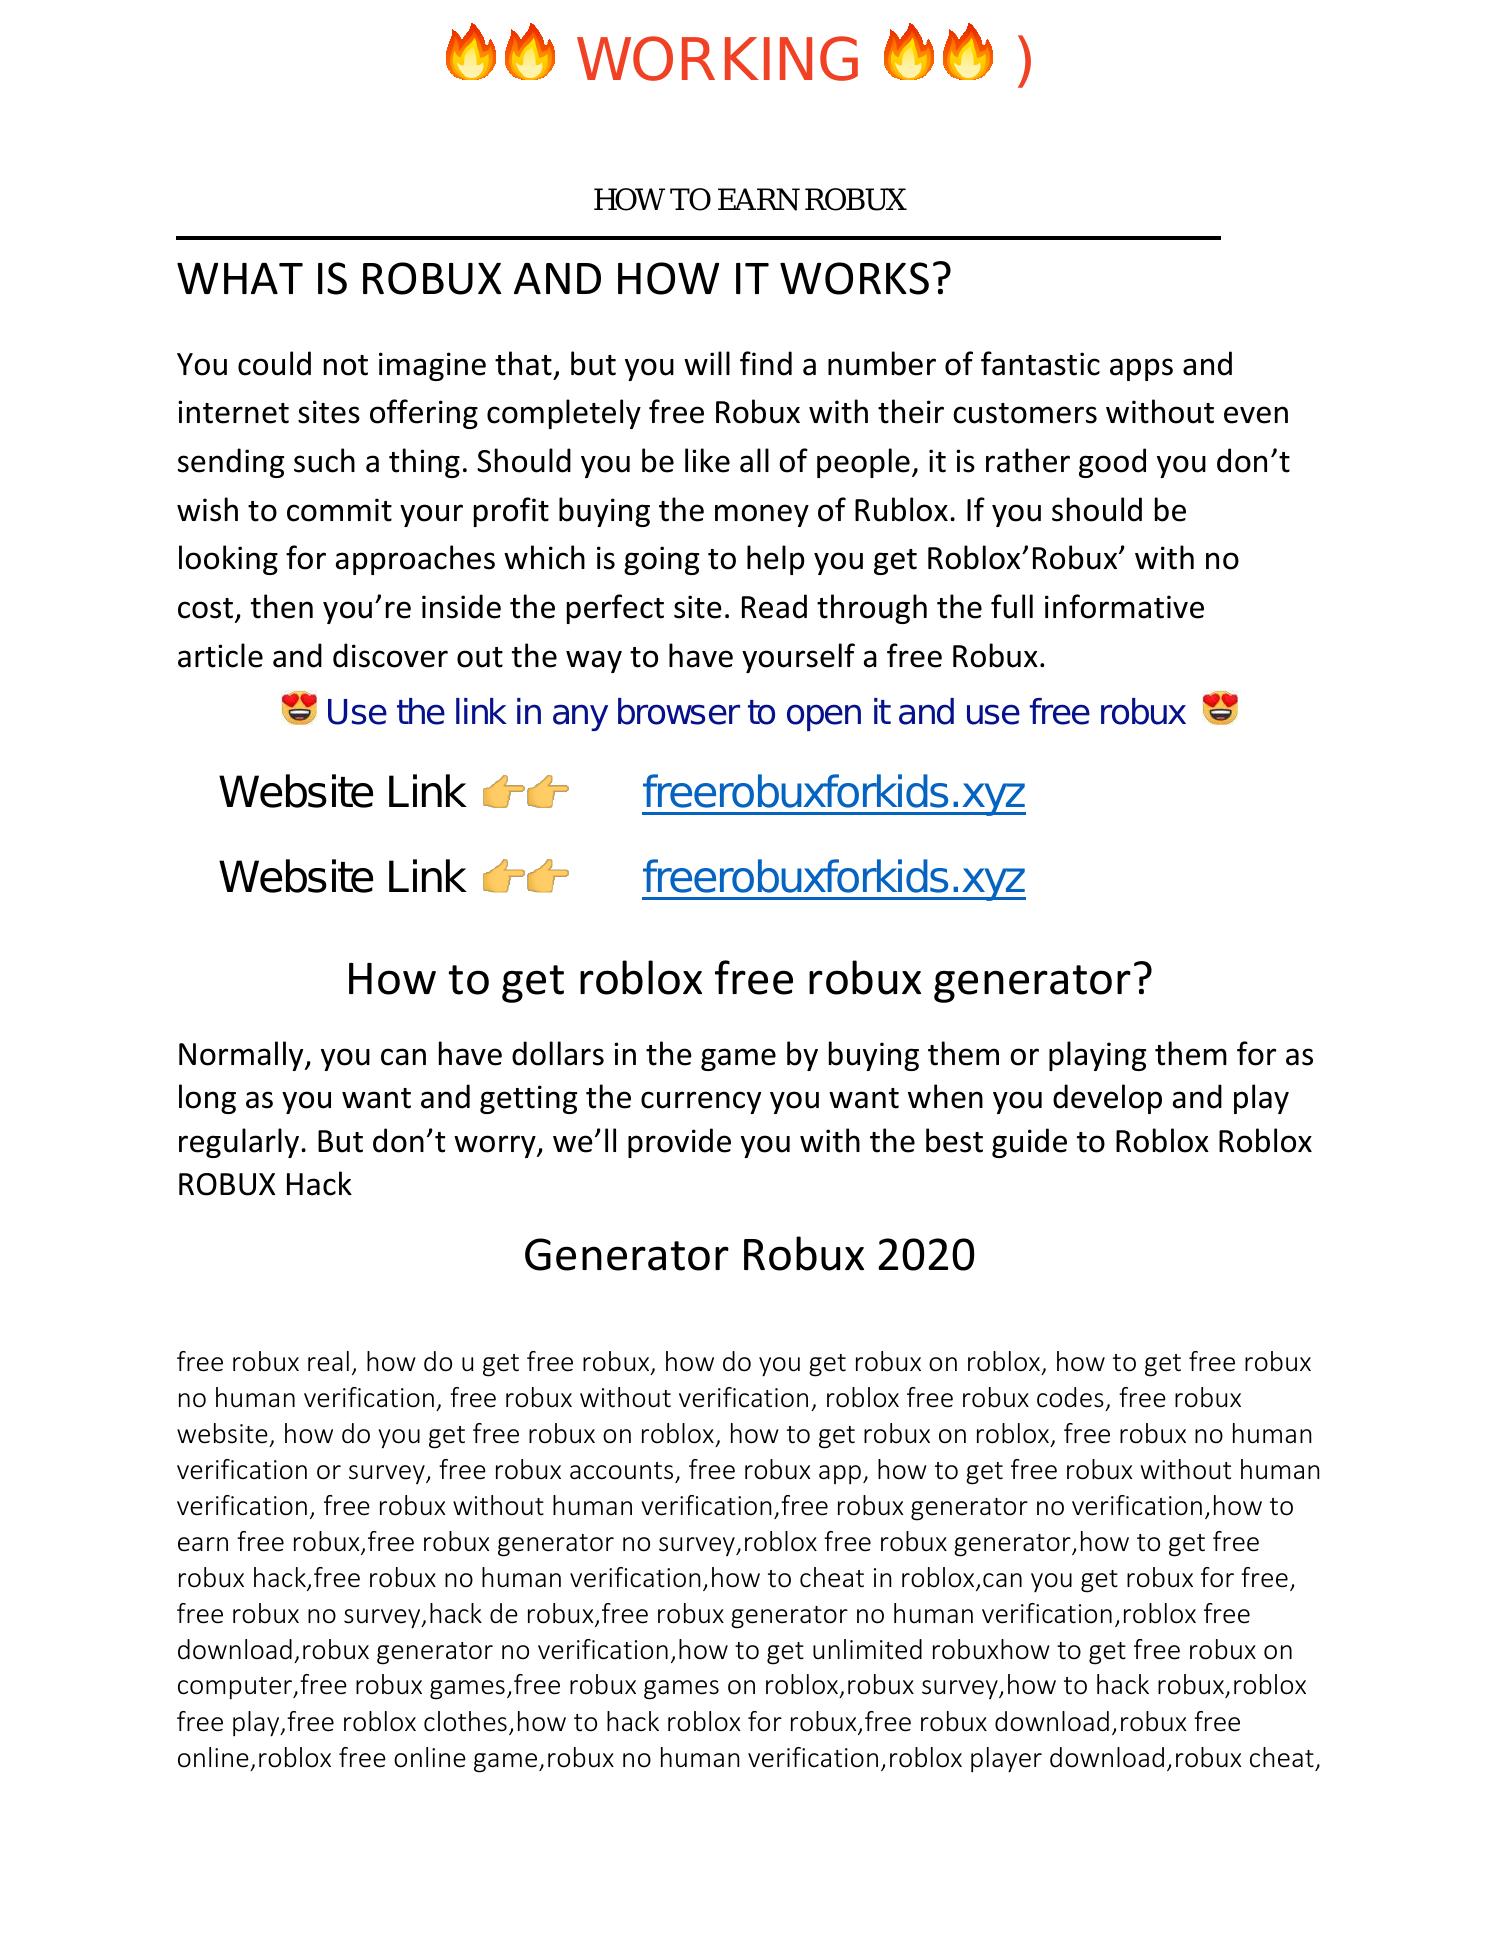 Roblox Robux Hack Generator Doc Docdroid - www.free robux hack generator.club